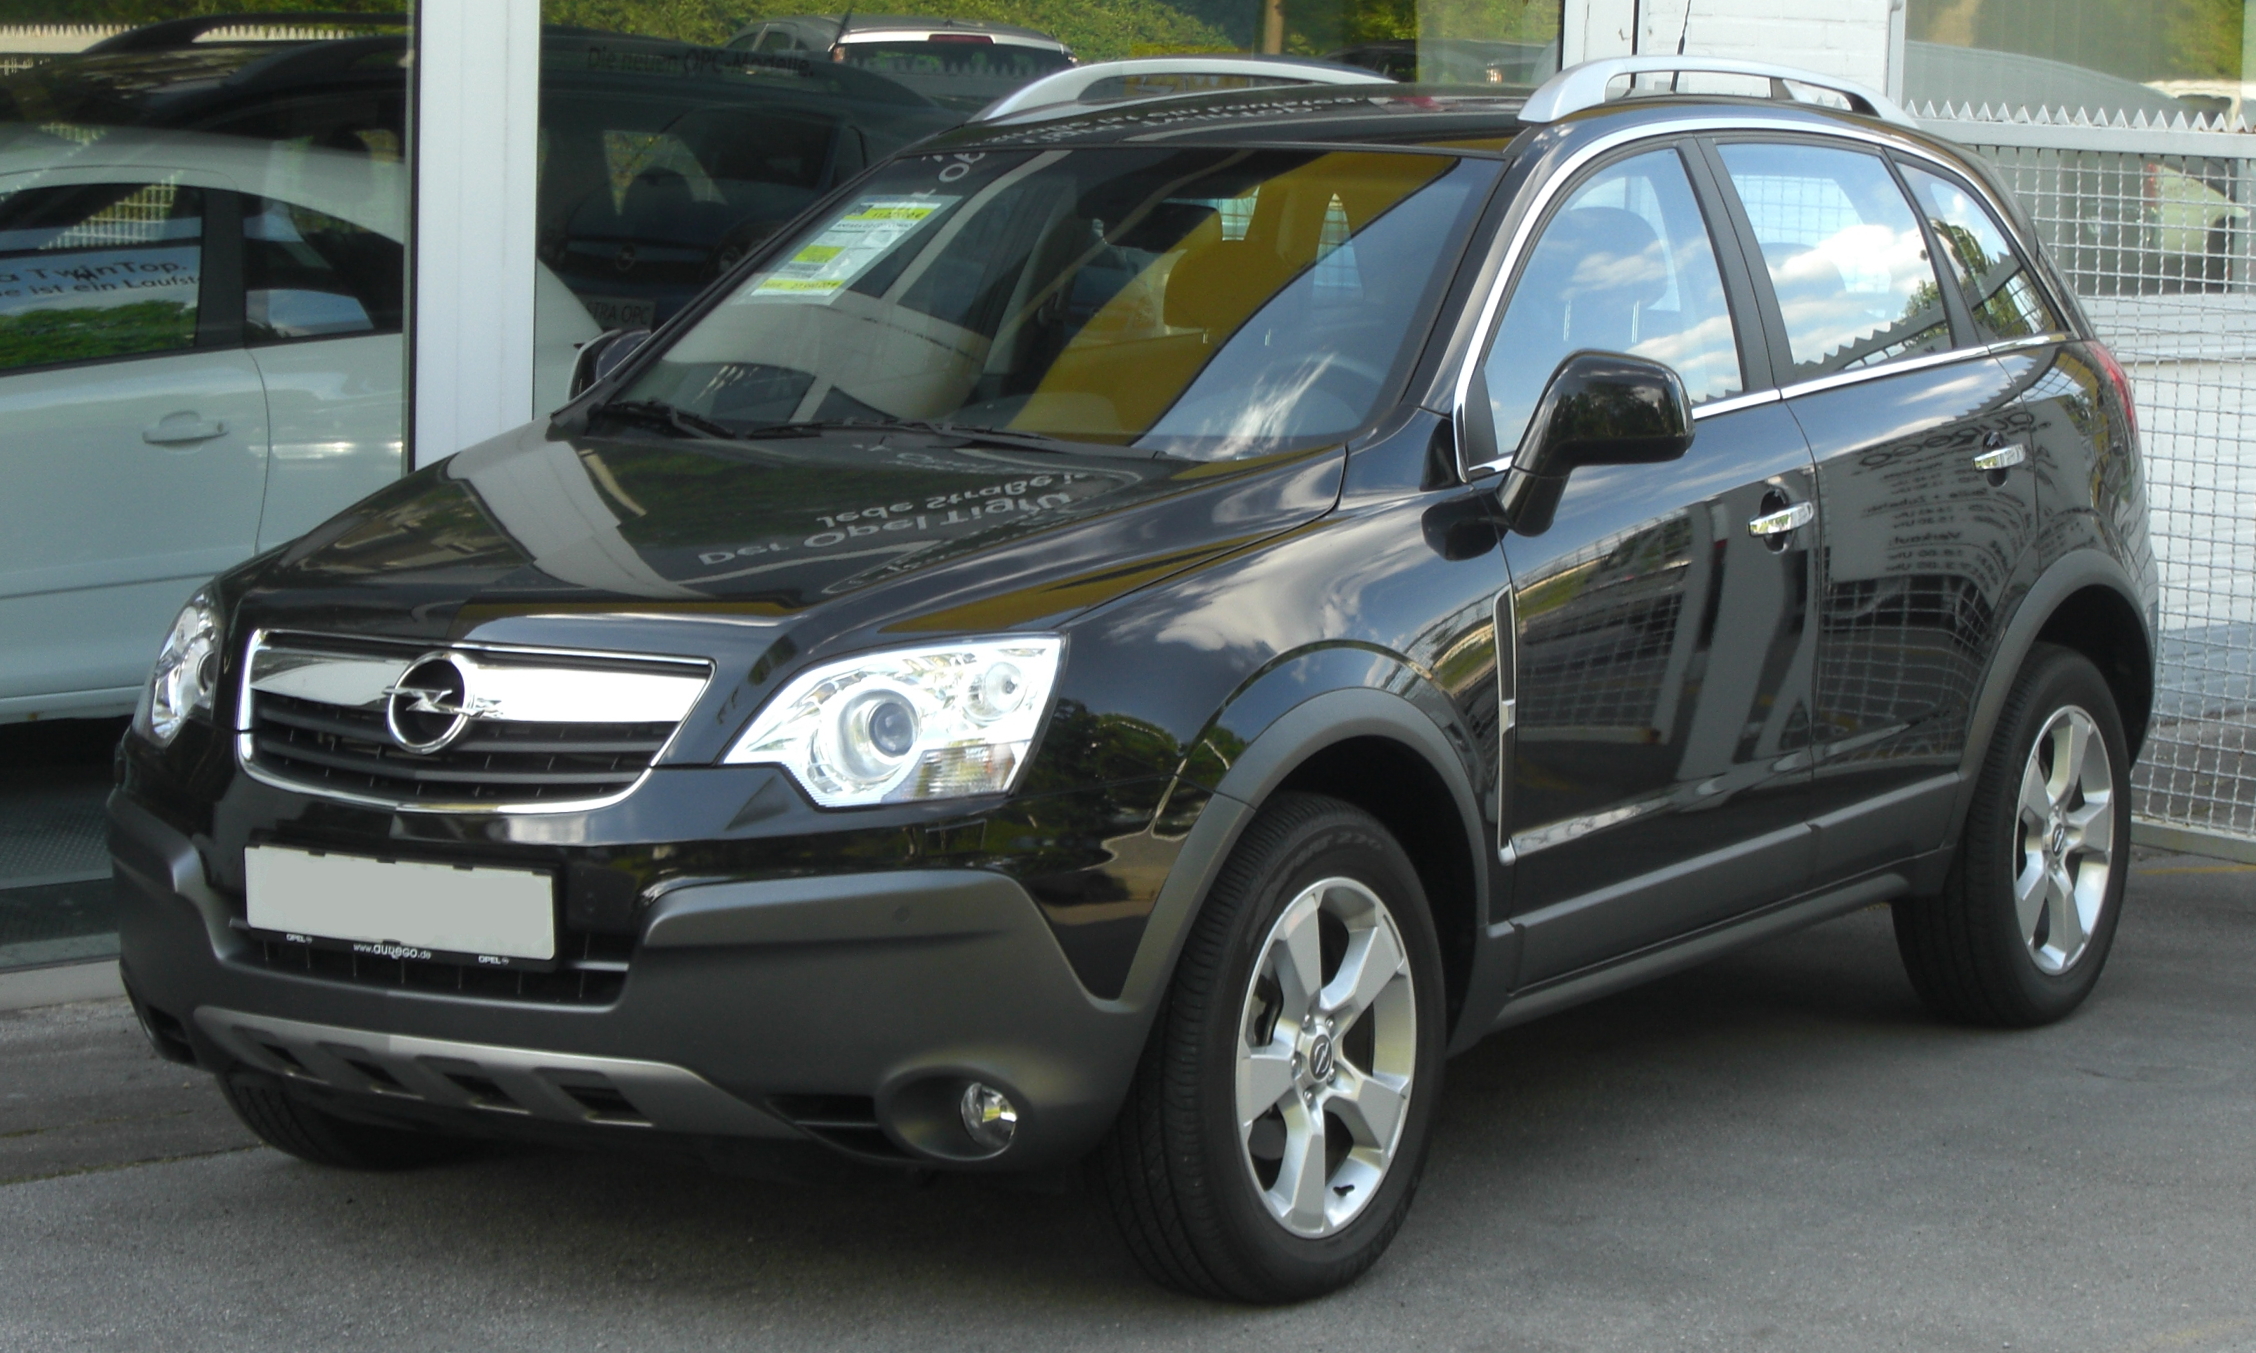 File:Opel Antara front.jpg - Wikimedia Commons